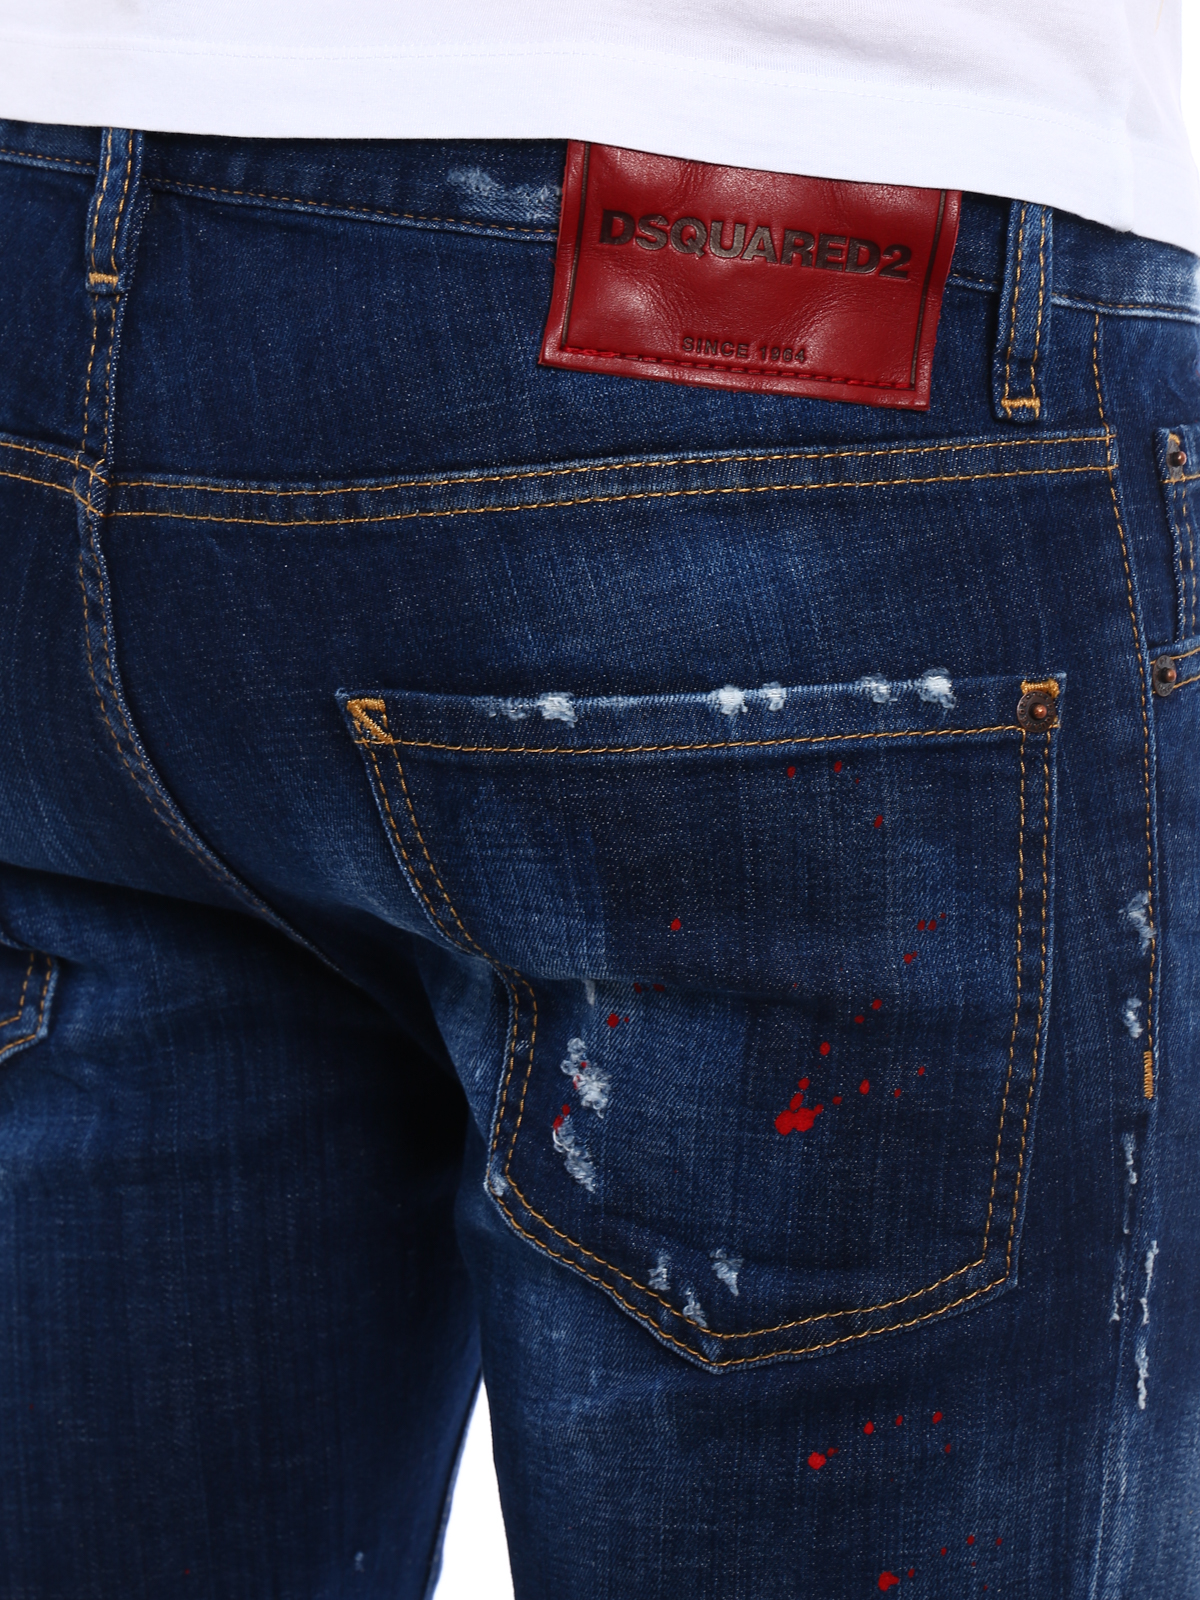 jones new york jeans lexington straight secret slimming features